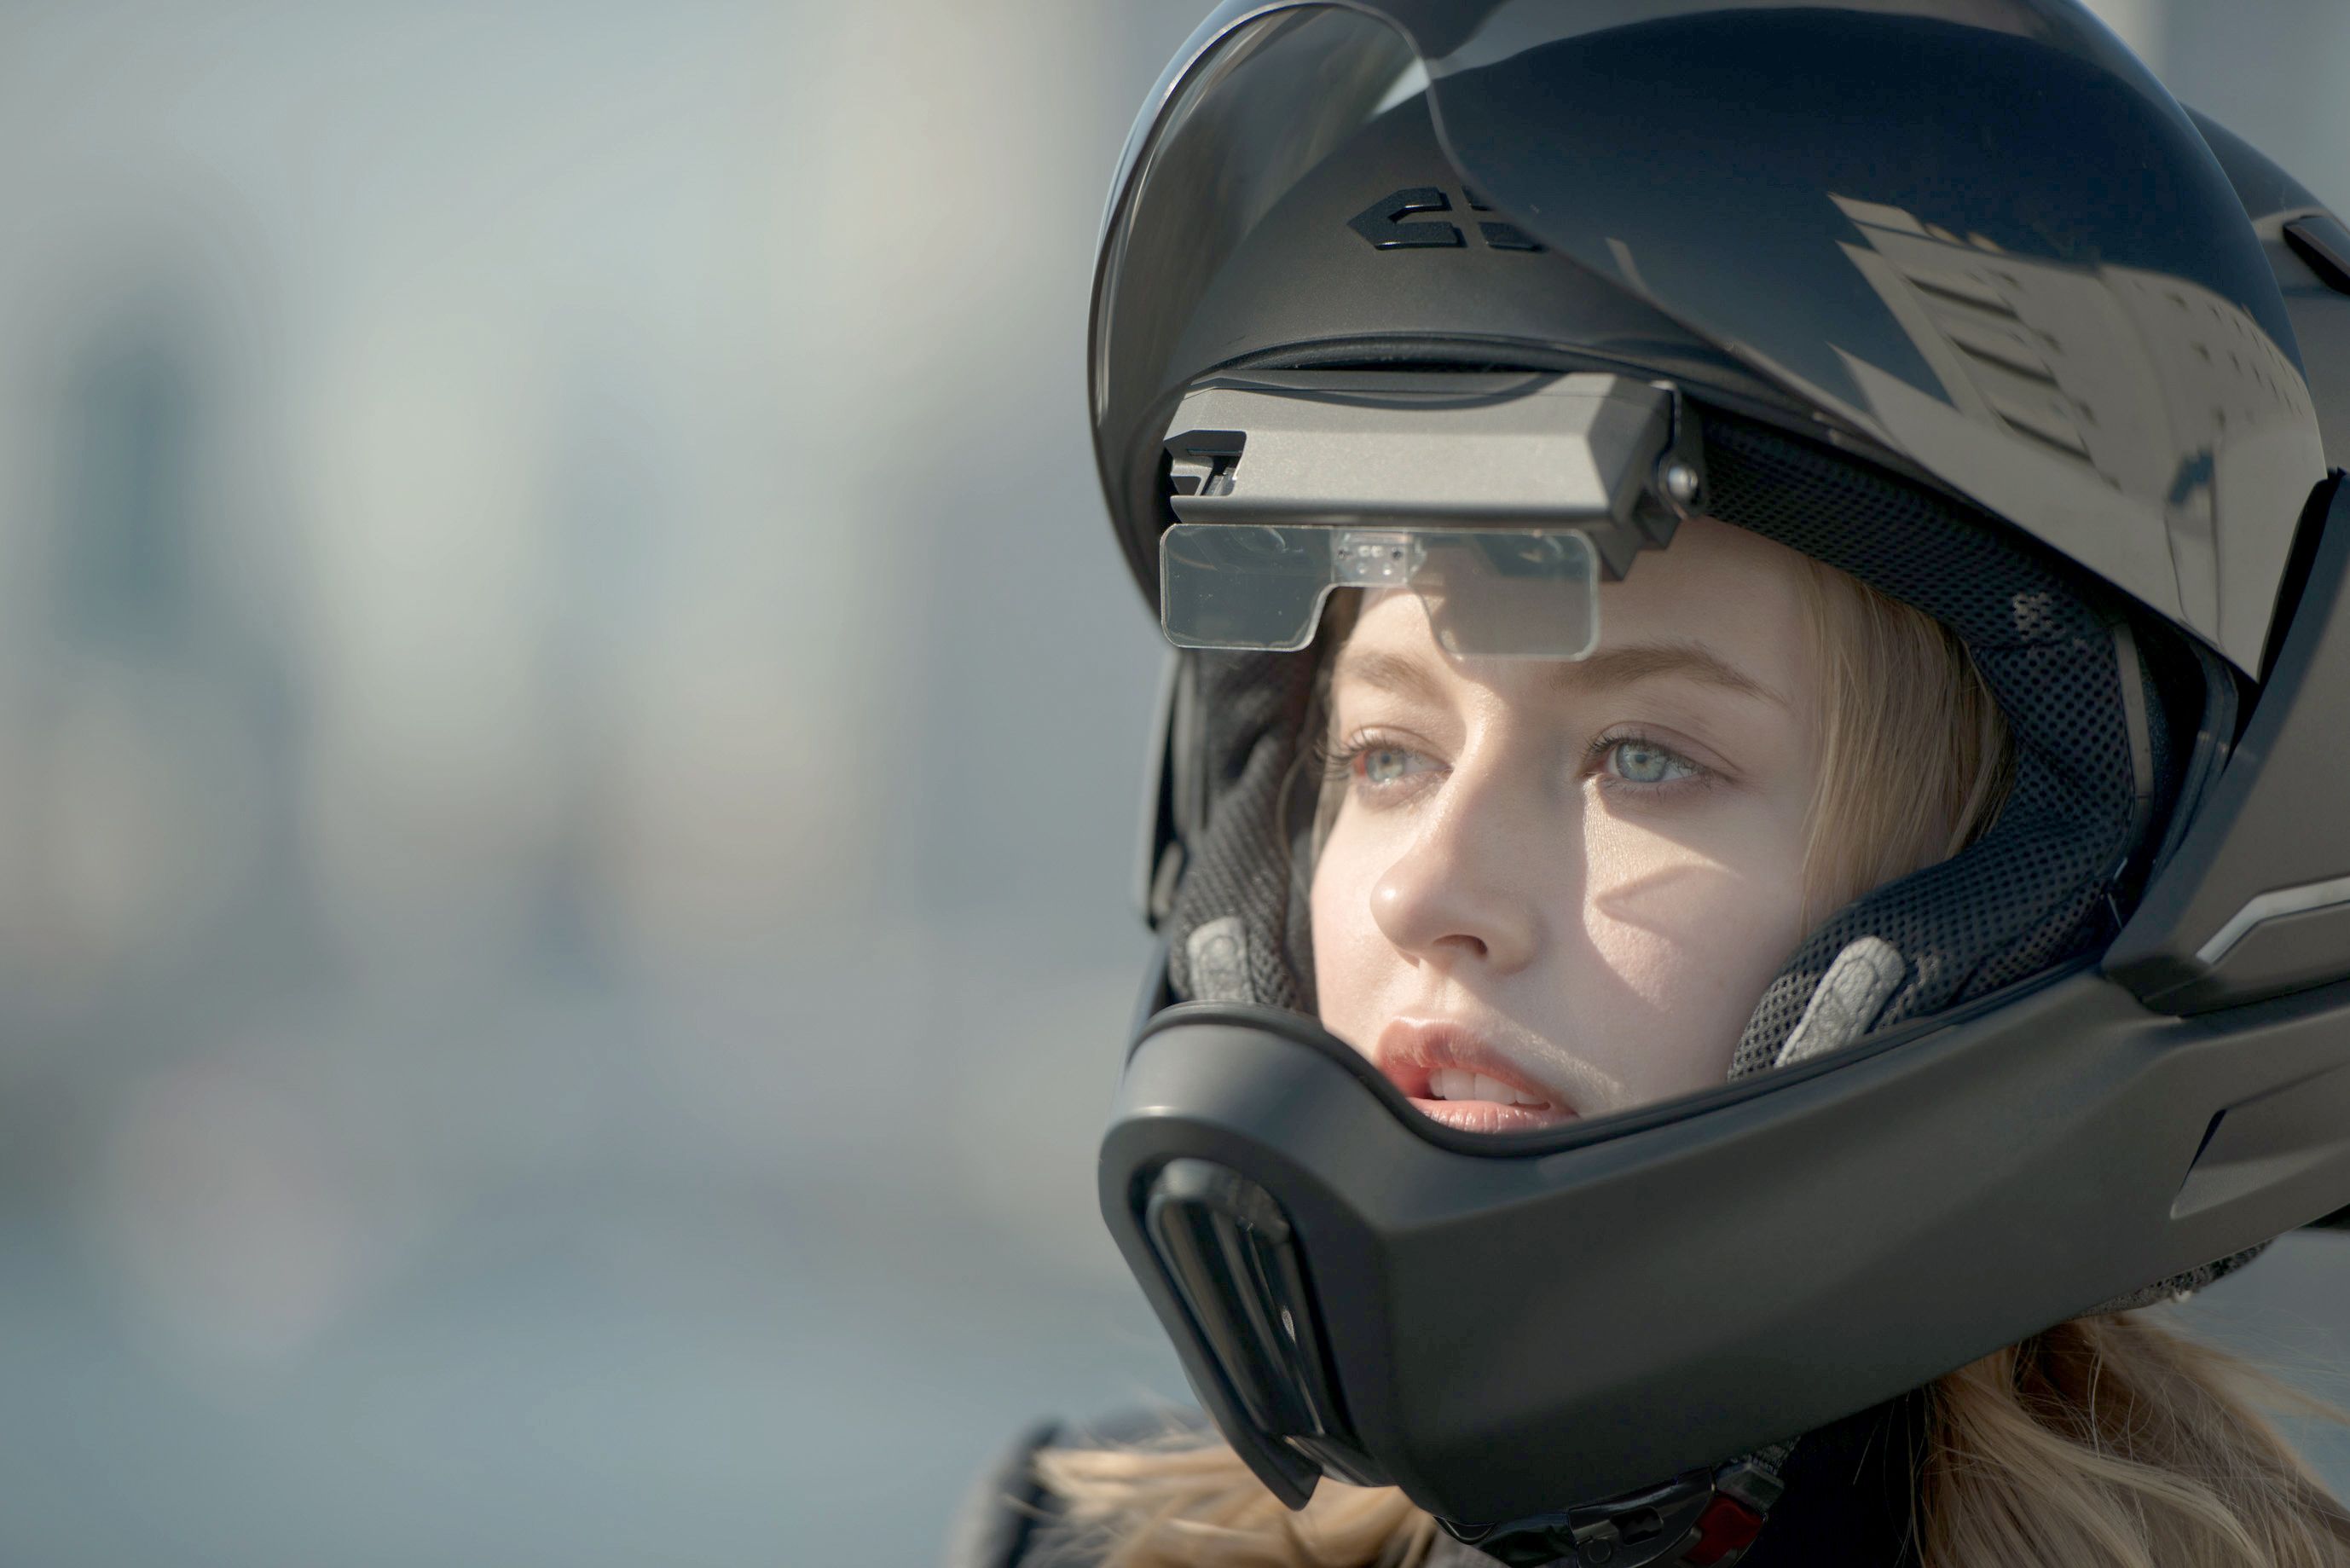 Japanese startup Borderless Inc’s $1399 smart helmet blurs sci-fi and reality